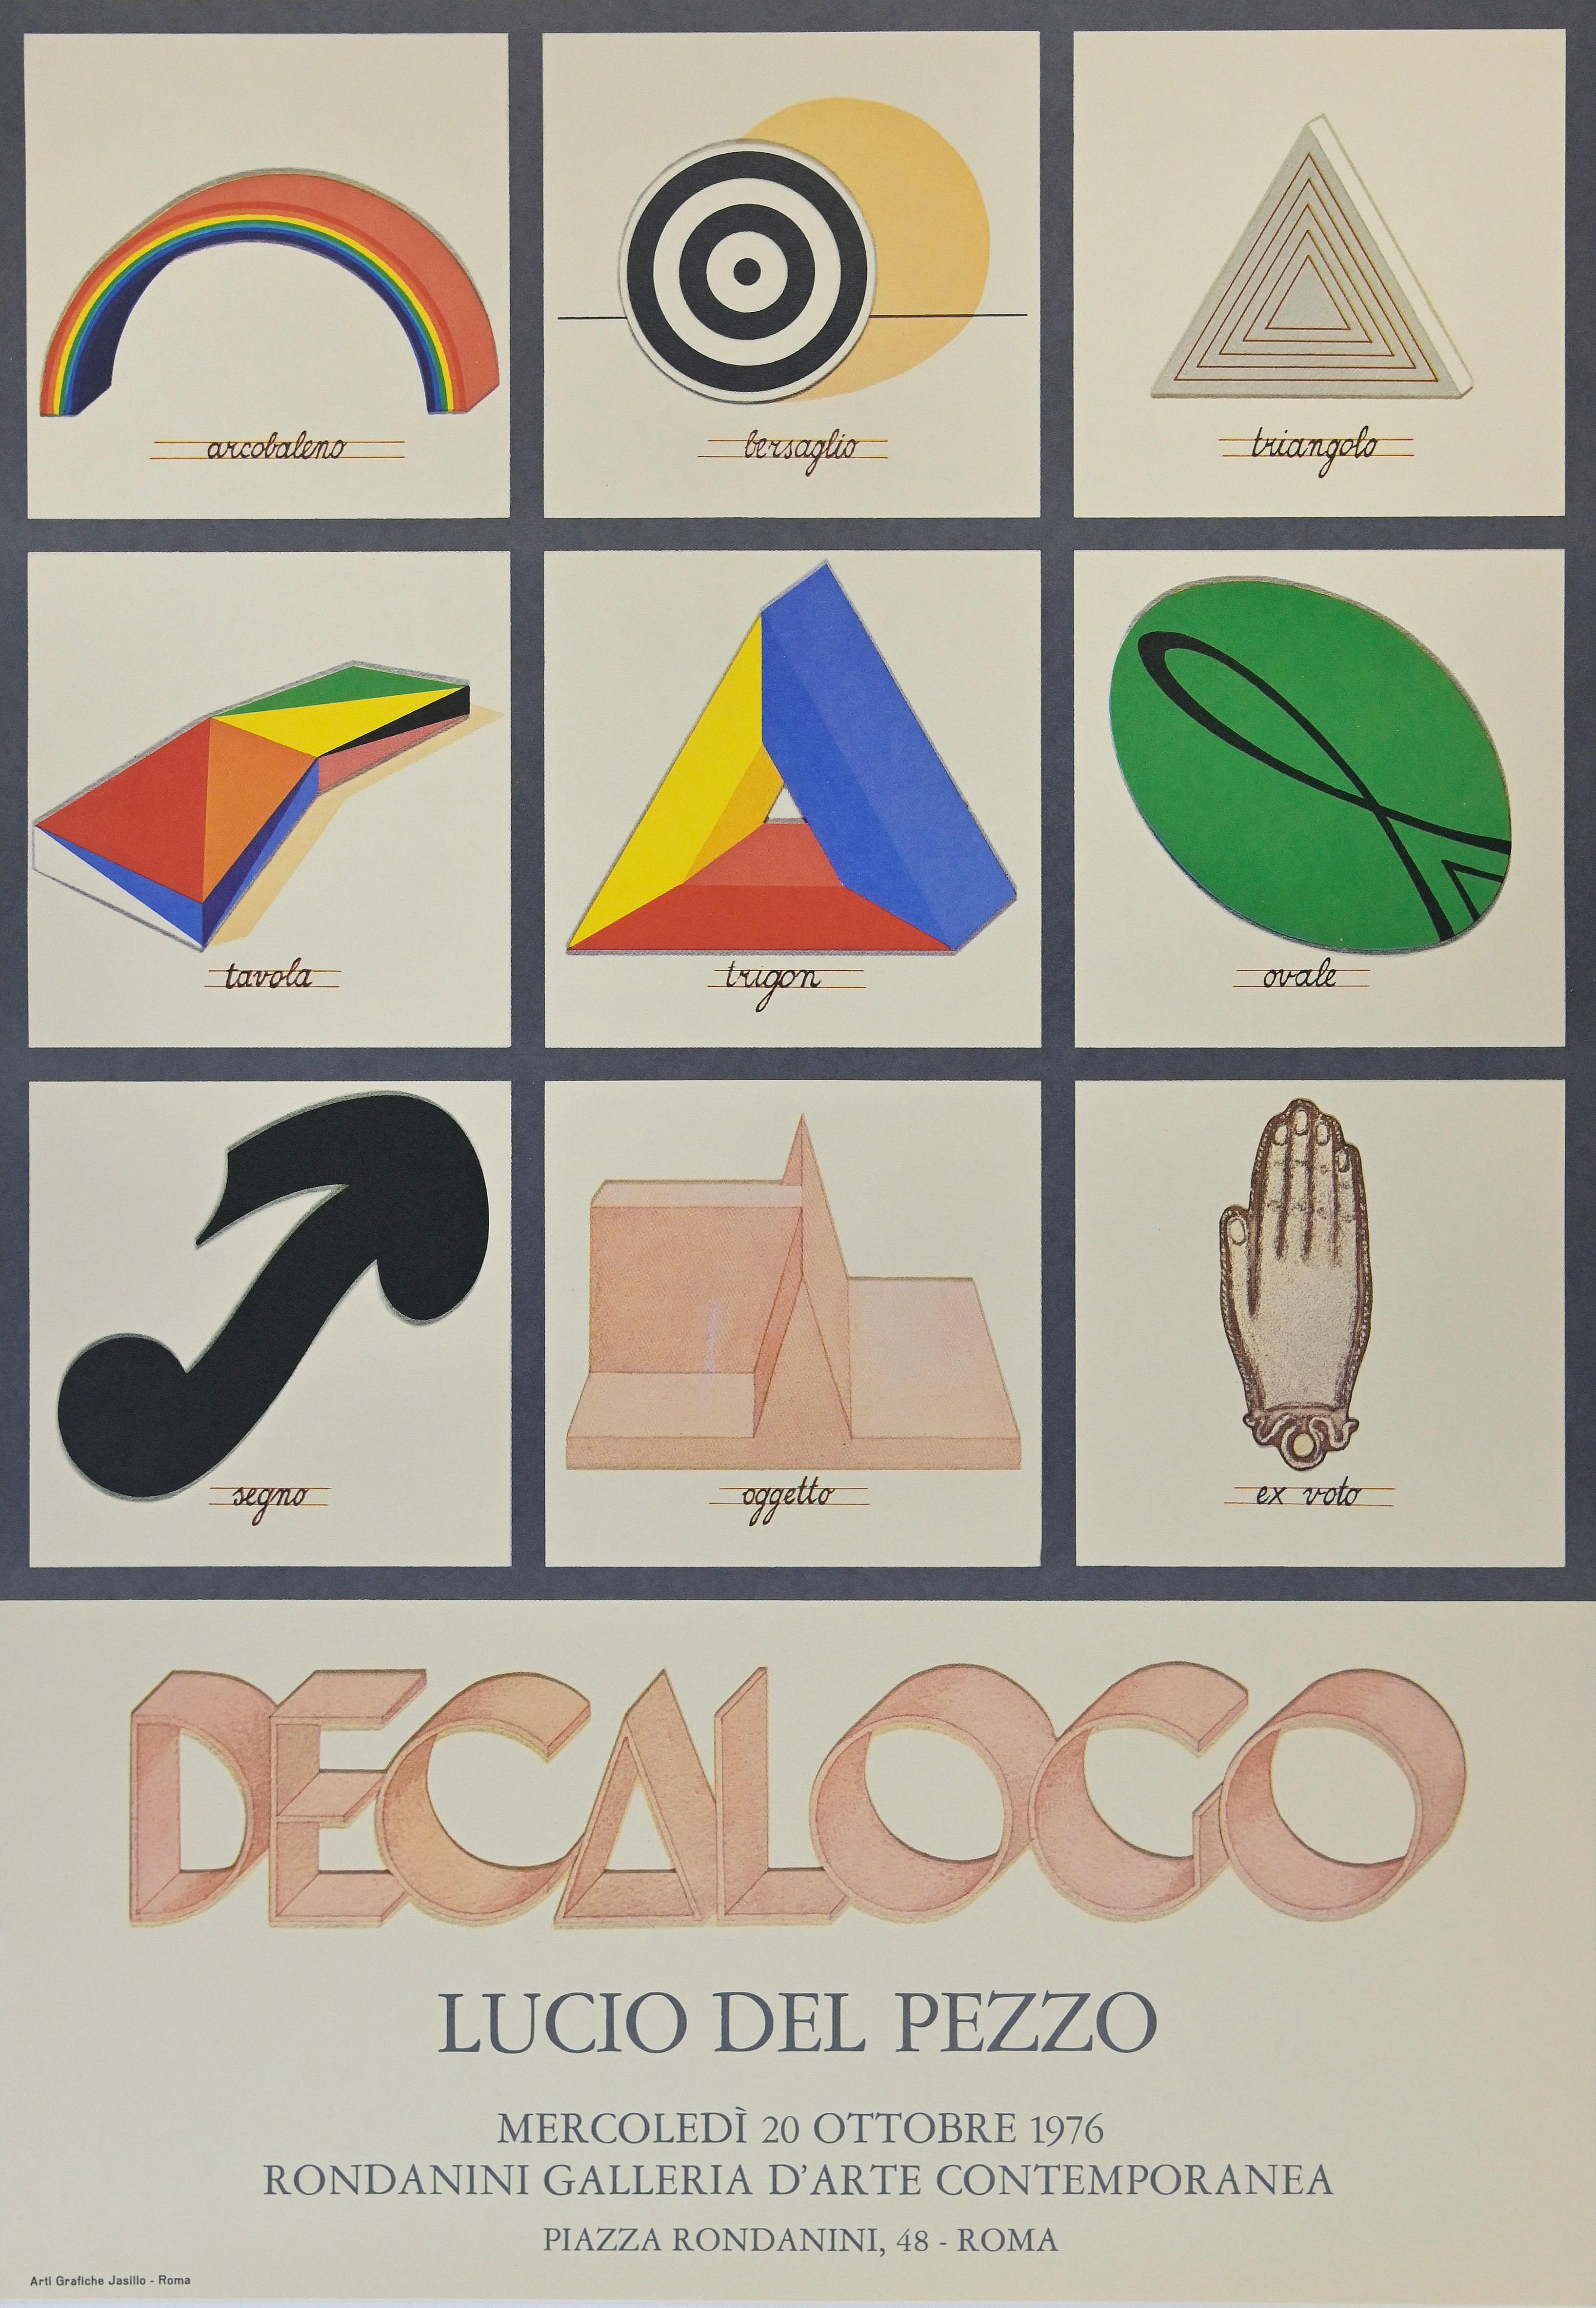 Lucio Del Pezzo Abstract Print - Decalogue - Offset Poster after Lucio del Pezzo - 1976